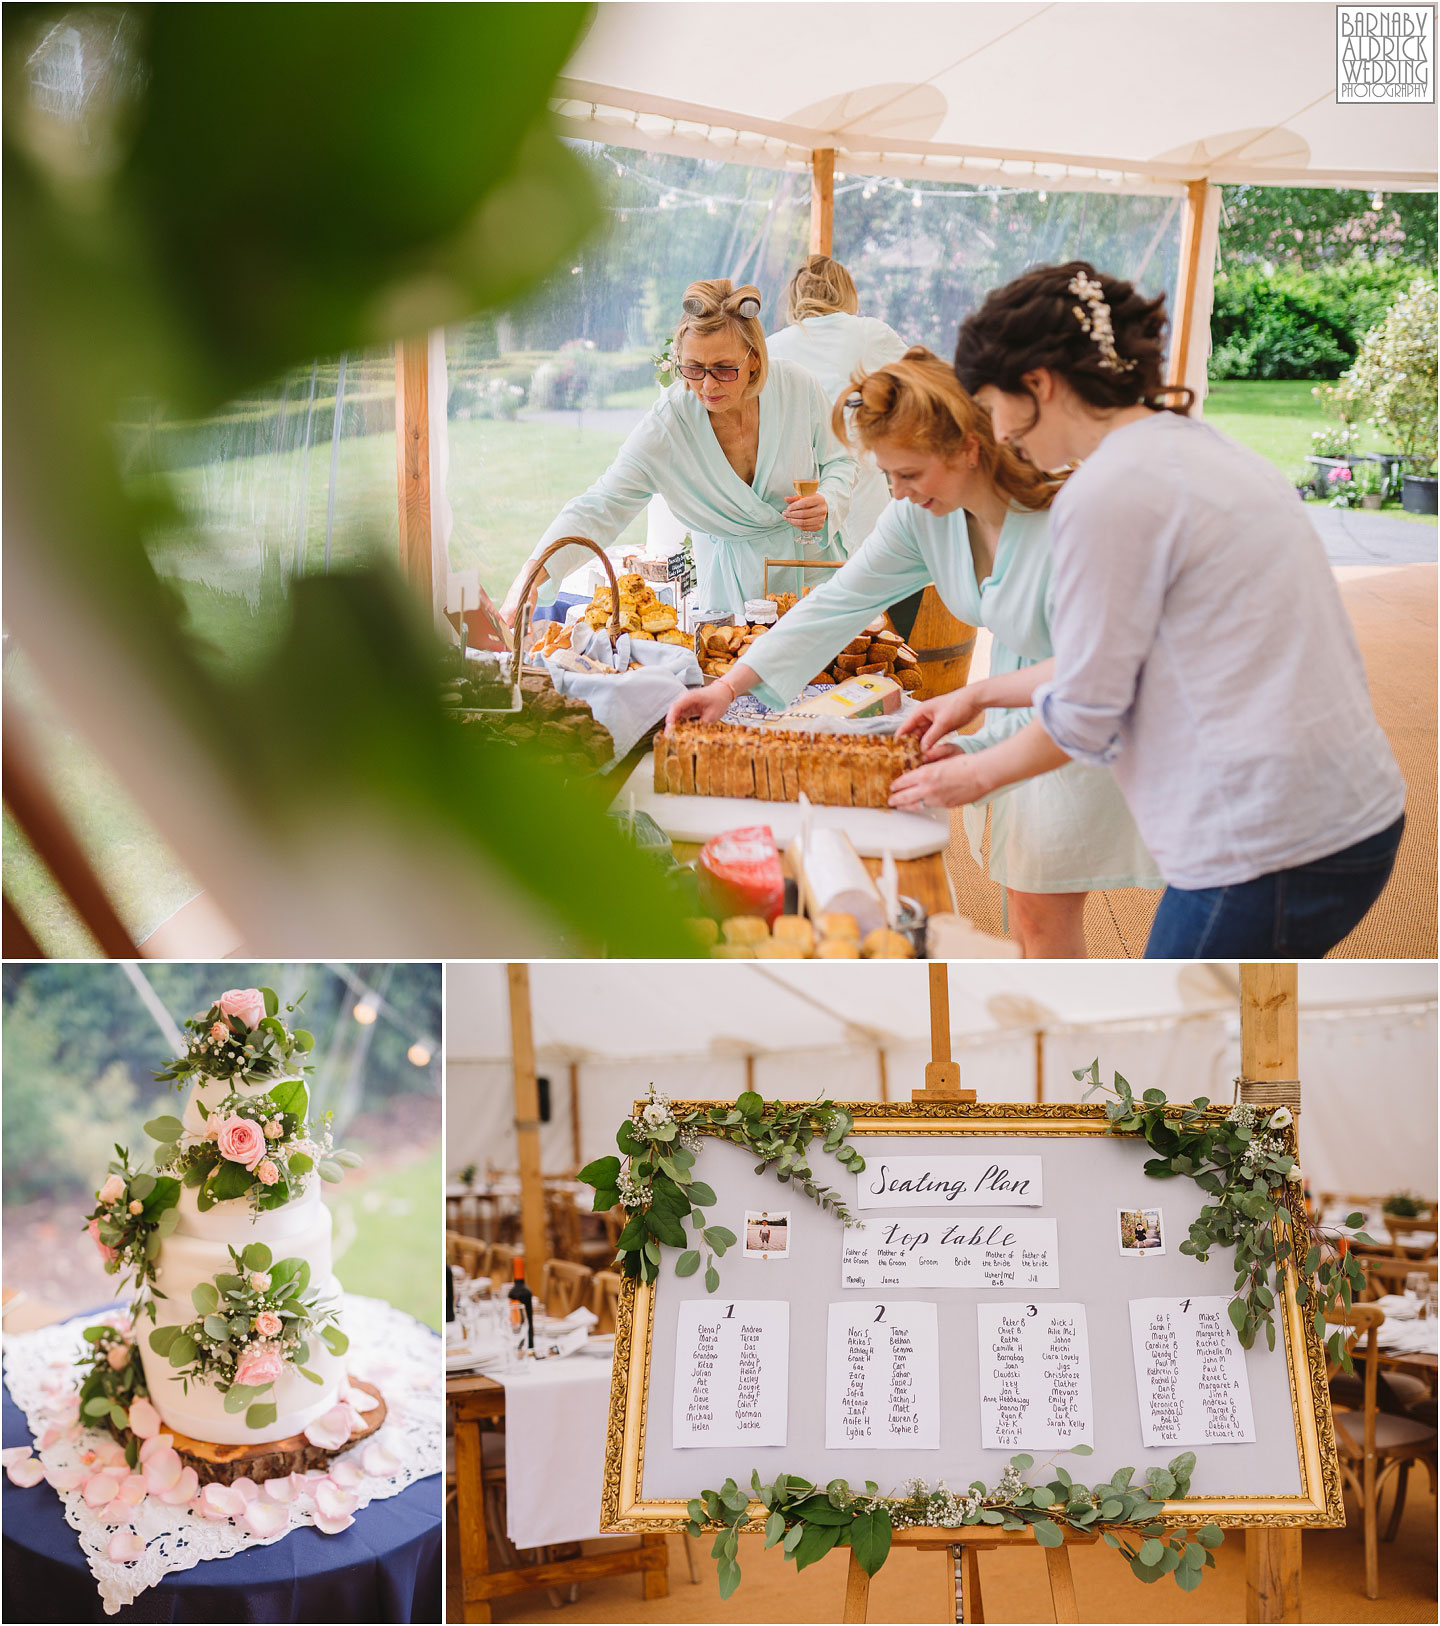 Photos of a Papakata Sperry Tent Garden Wedding, Garden Marquee Wedding, Papakata Sperry Tent Wedding, Sperry Tent Marquee Wedding, Yorkshire garden Marquee Wedding company